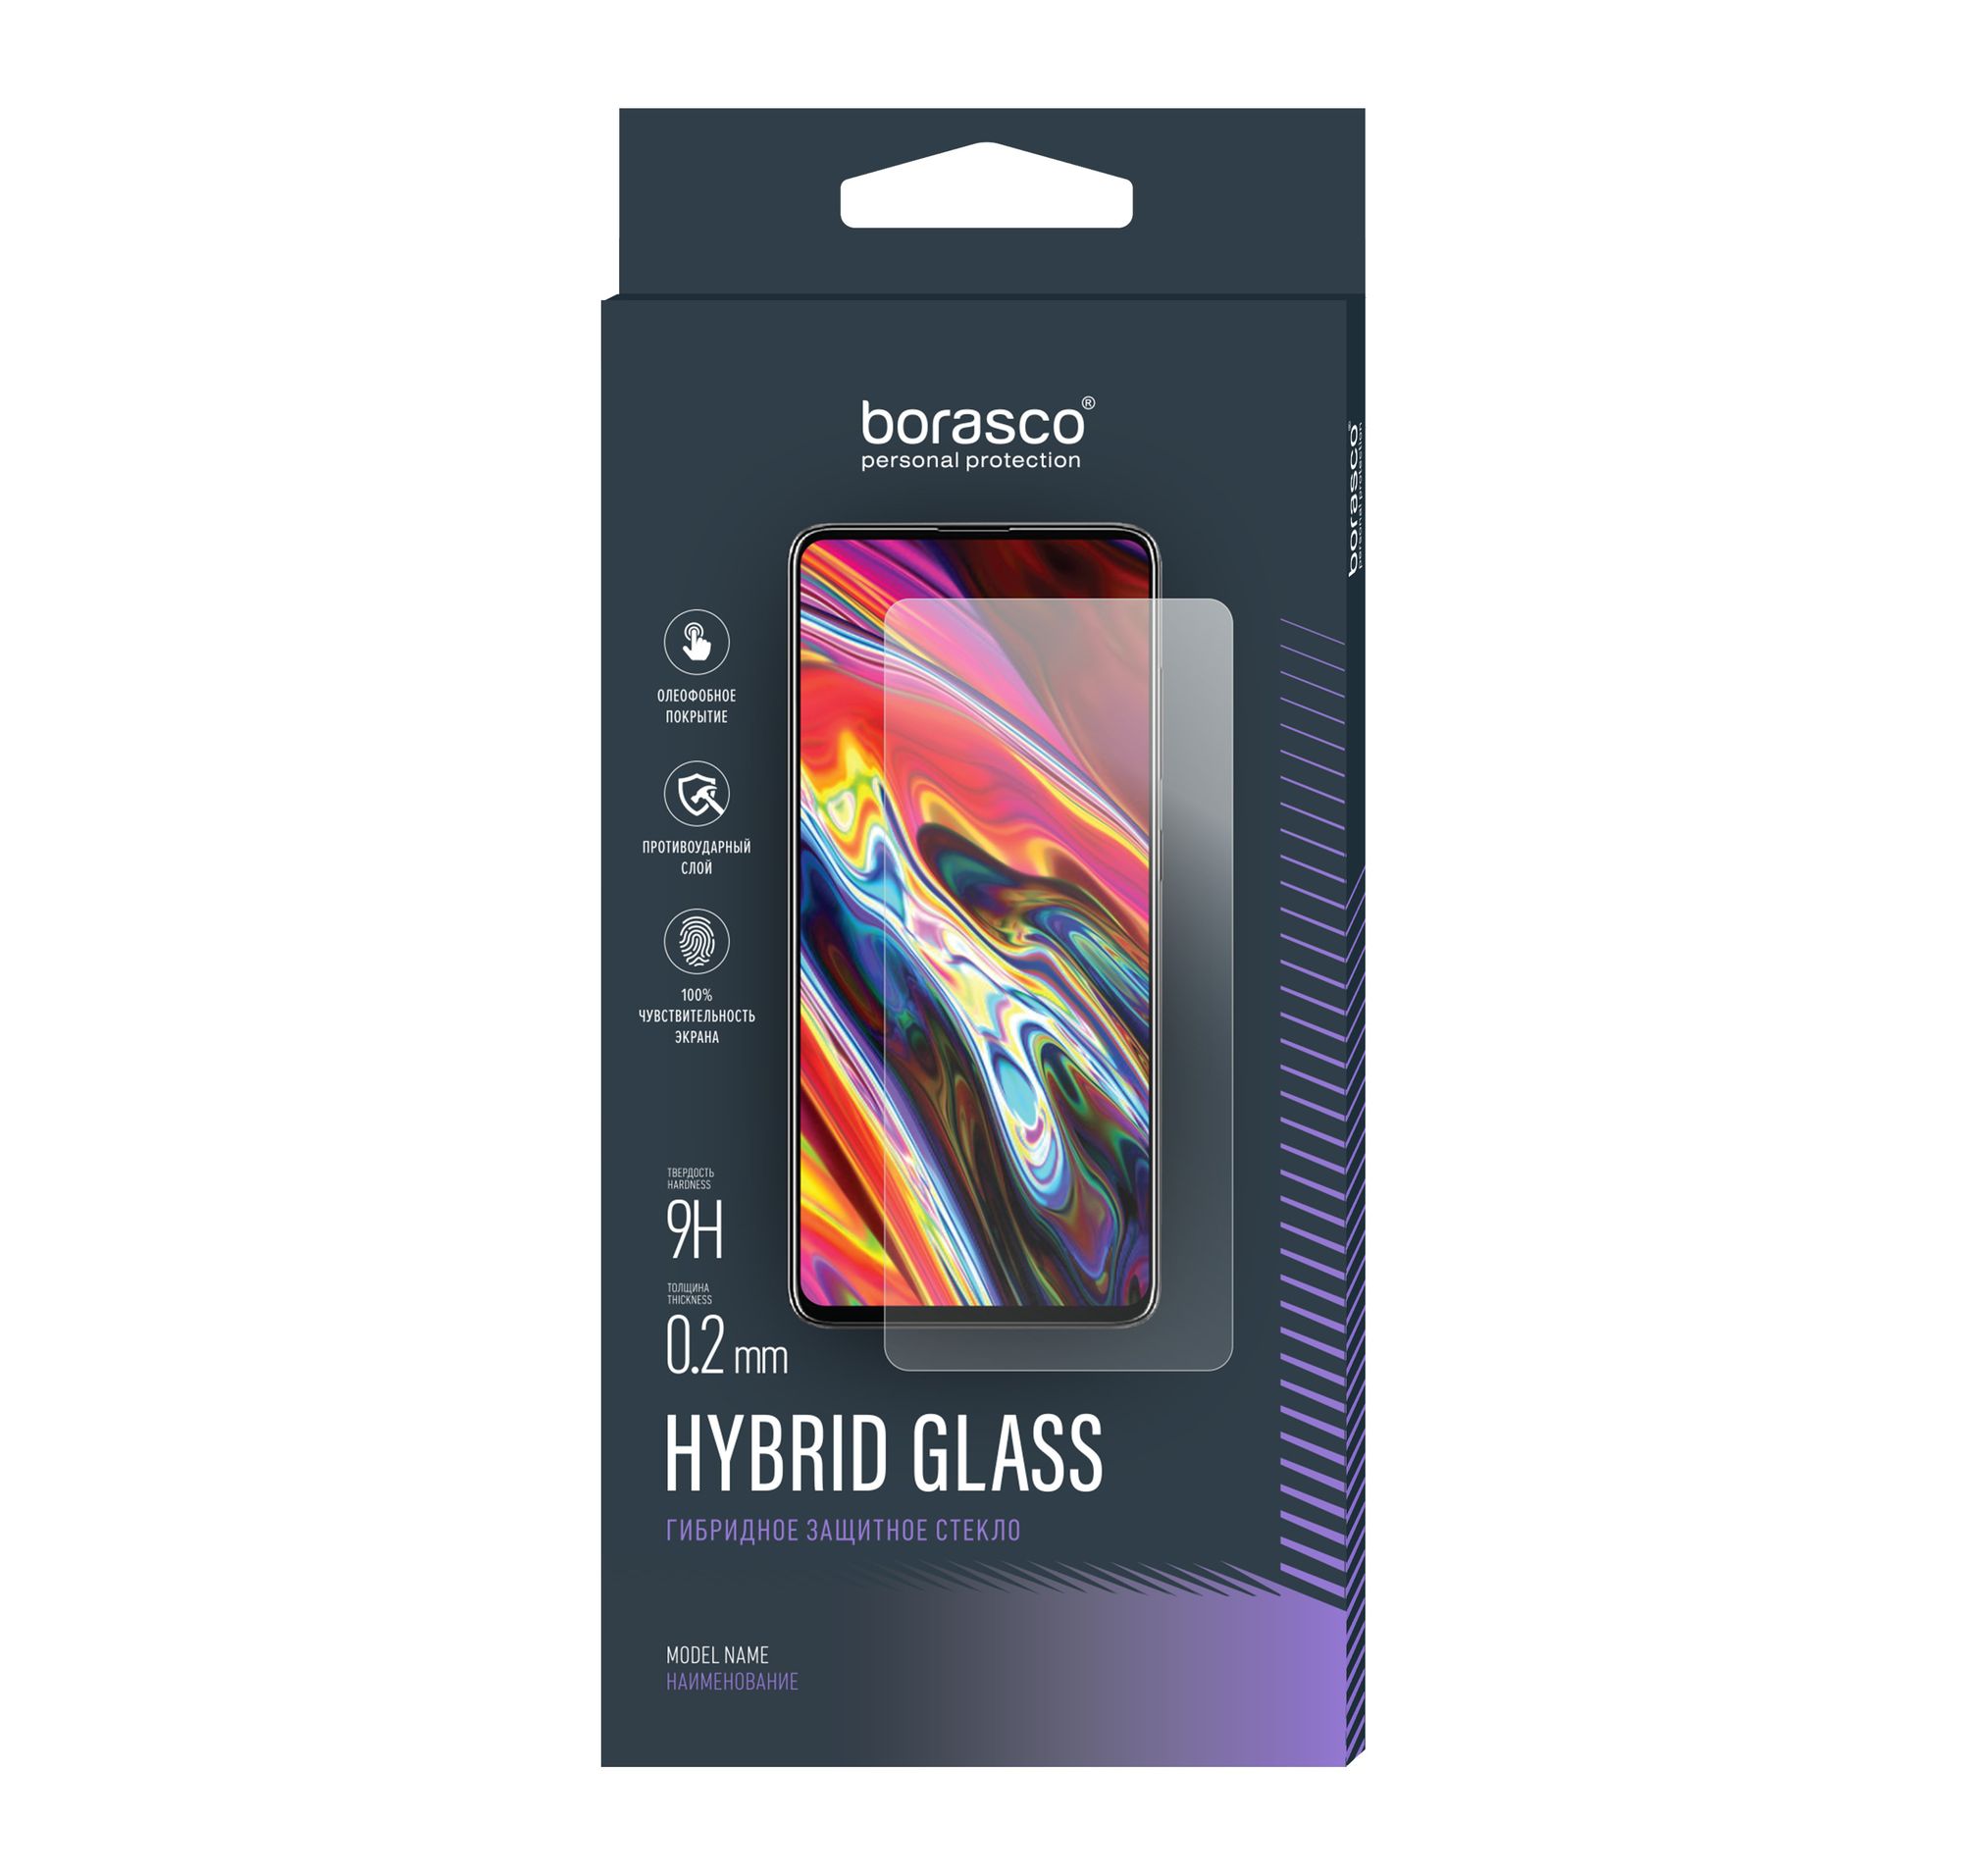 Стекло защитное Hybrid Glass VSP 0,26 мм для Apple iPad Pro 9.7/Air2/Air защитное стекло red line для apple ipad air air2 pro 9 7 2018 ут000005067